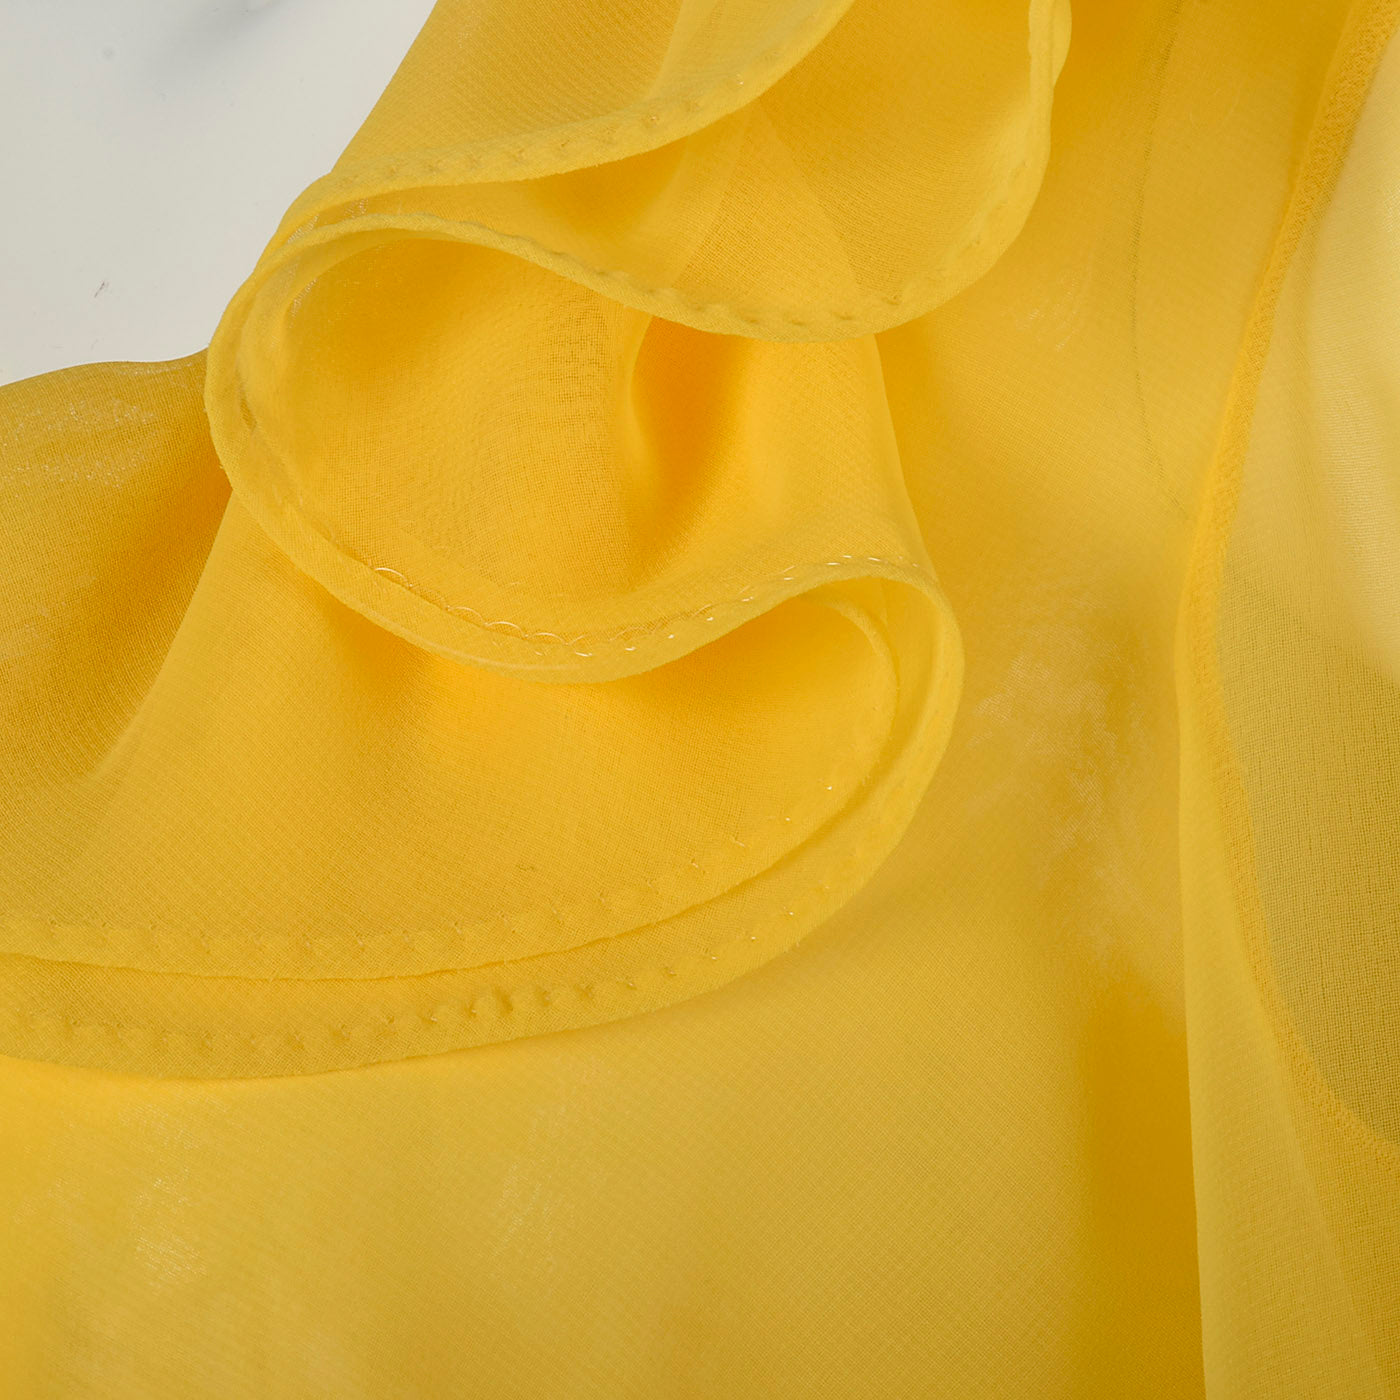 1970s Elegant Sheer Yellow Wrap Blouse